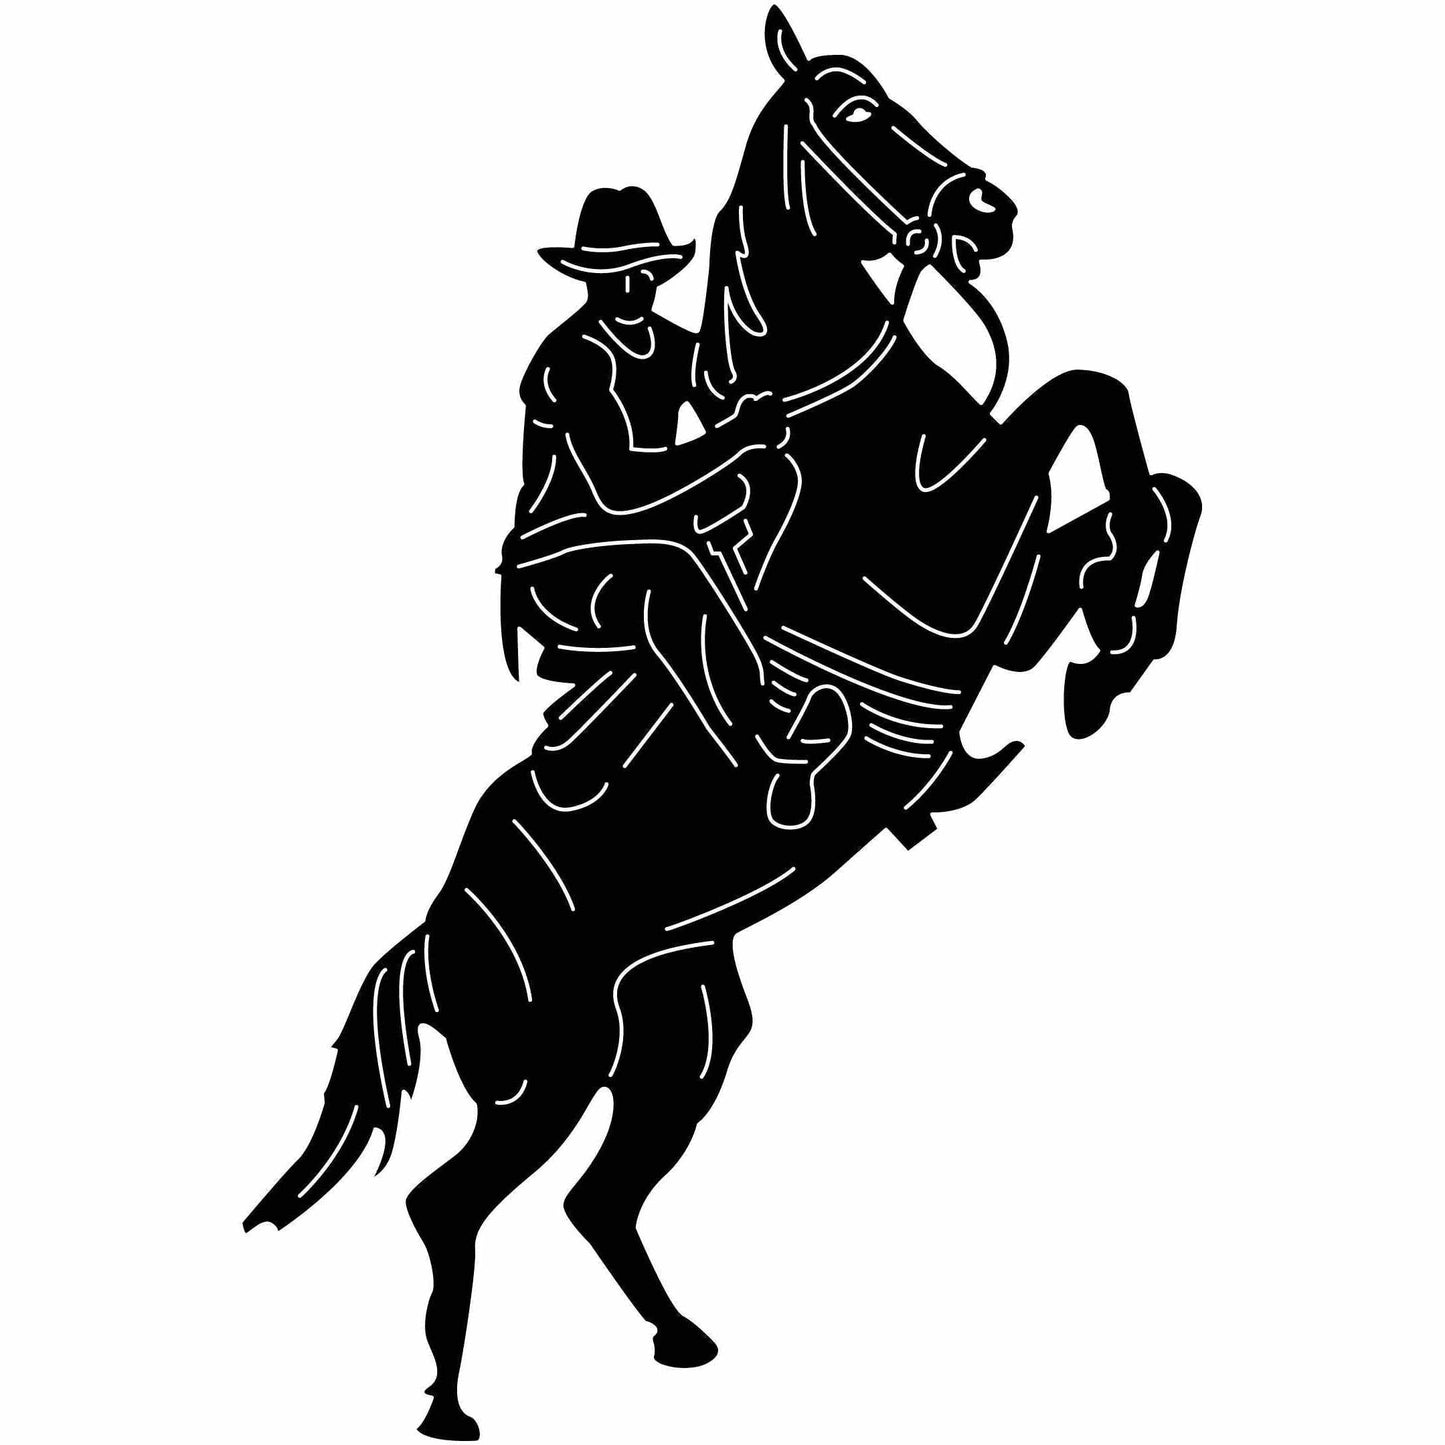 Free Cowboy and Horse-DXFforCNC.com-DXF Files cut ready cnc machines